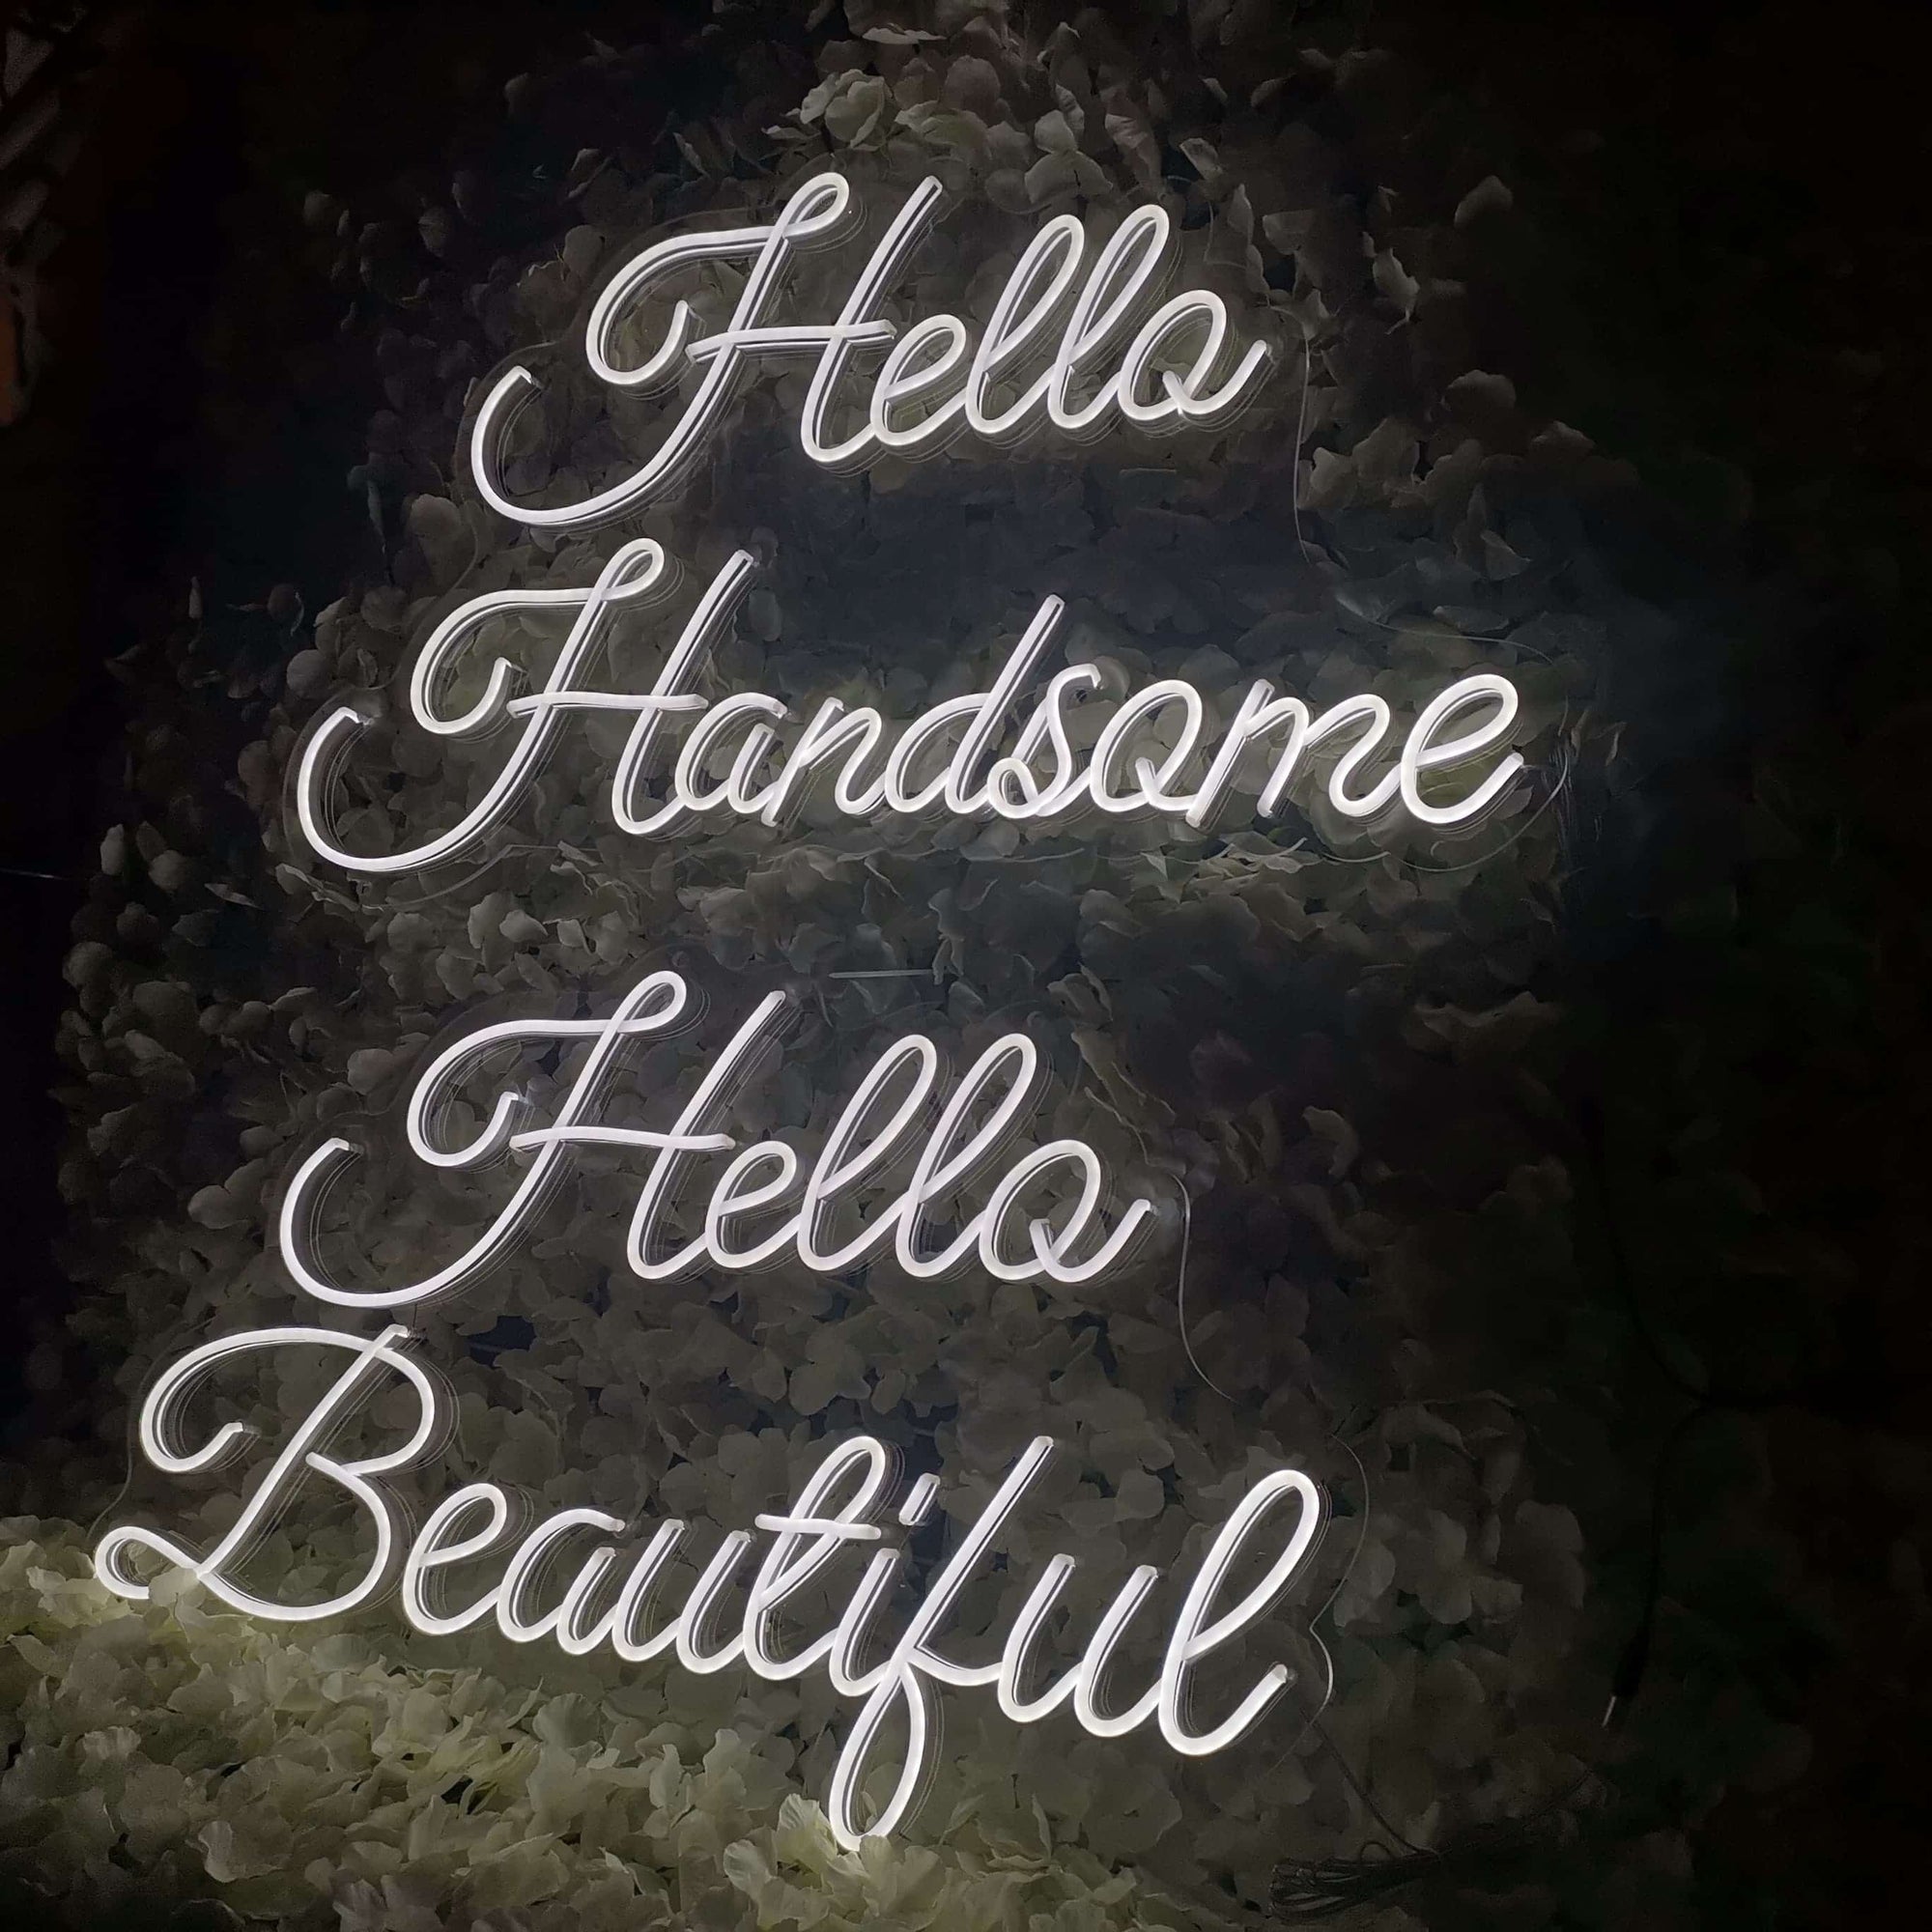 SELICOR Hello Beautiful Hello Handsome Personalized Neon Signs For Wall Decor